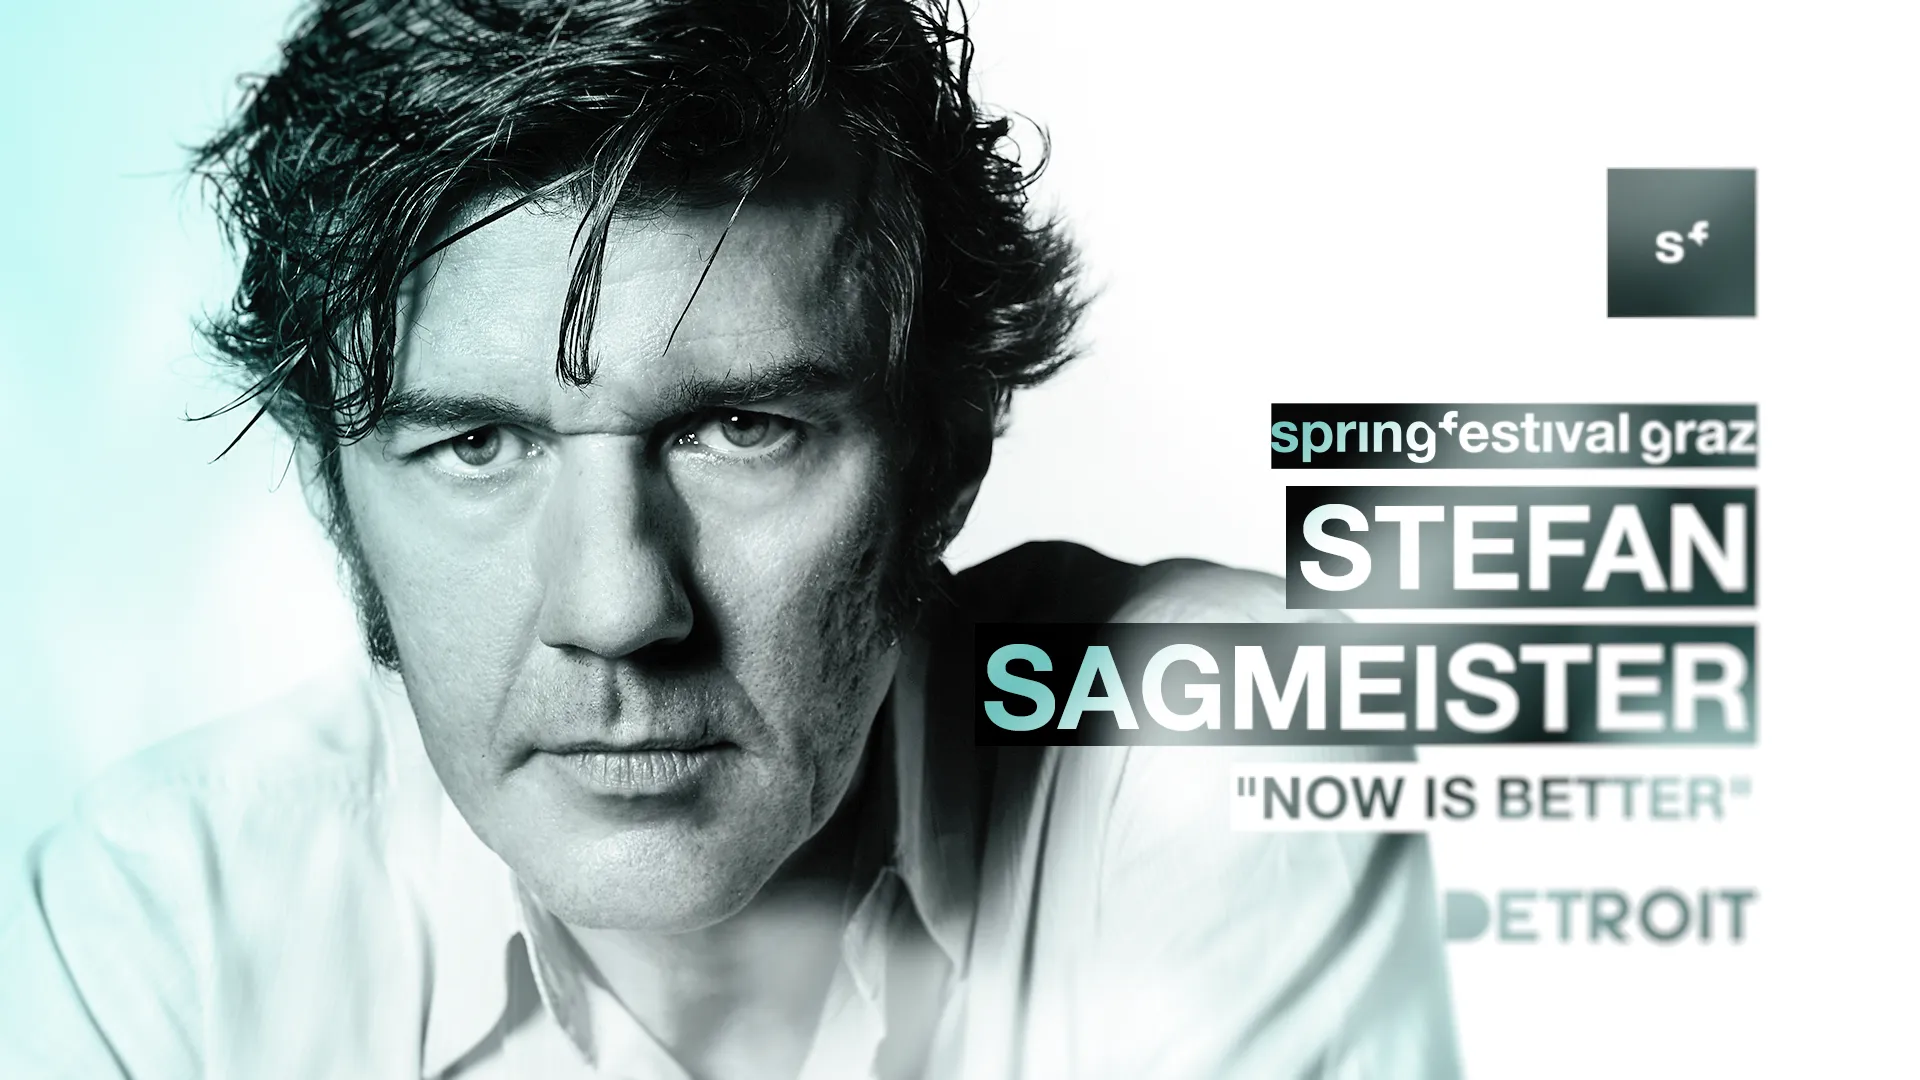 Stefan Sagmeister "Now is better"